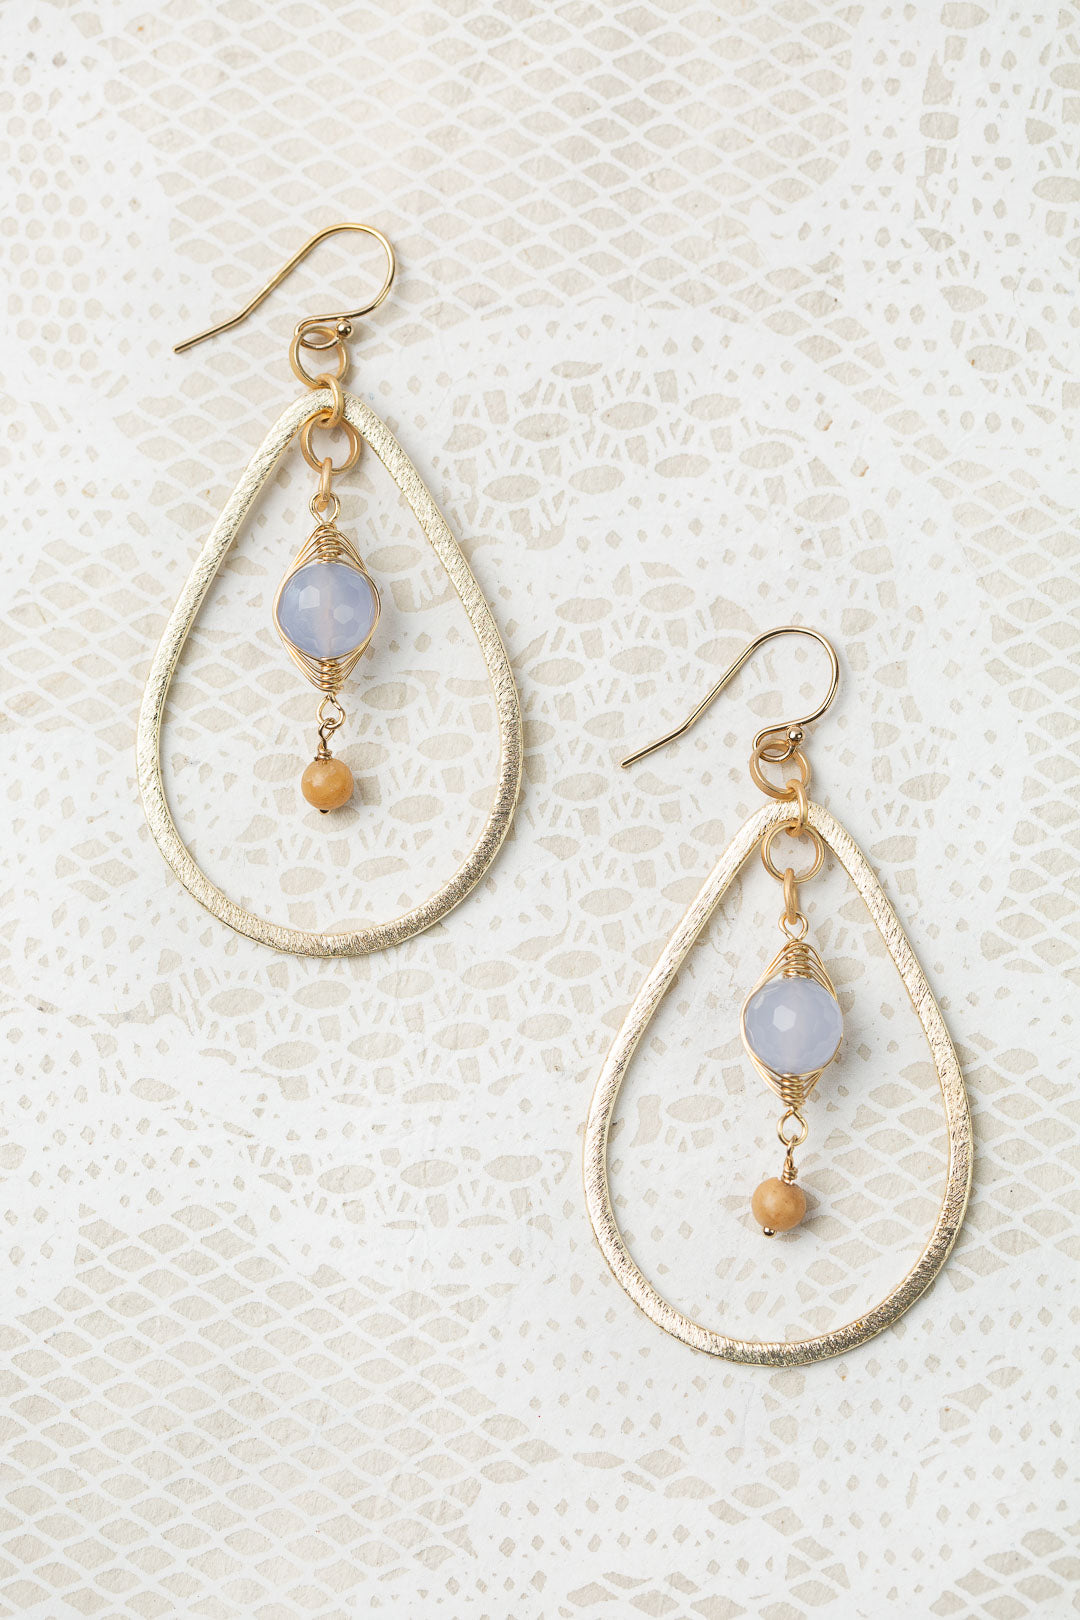 Blue Lace Jasper Herringbone Earrings